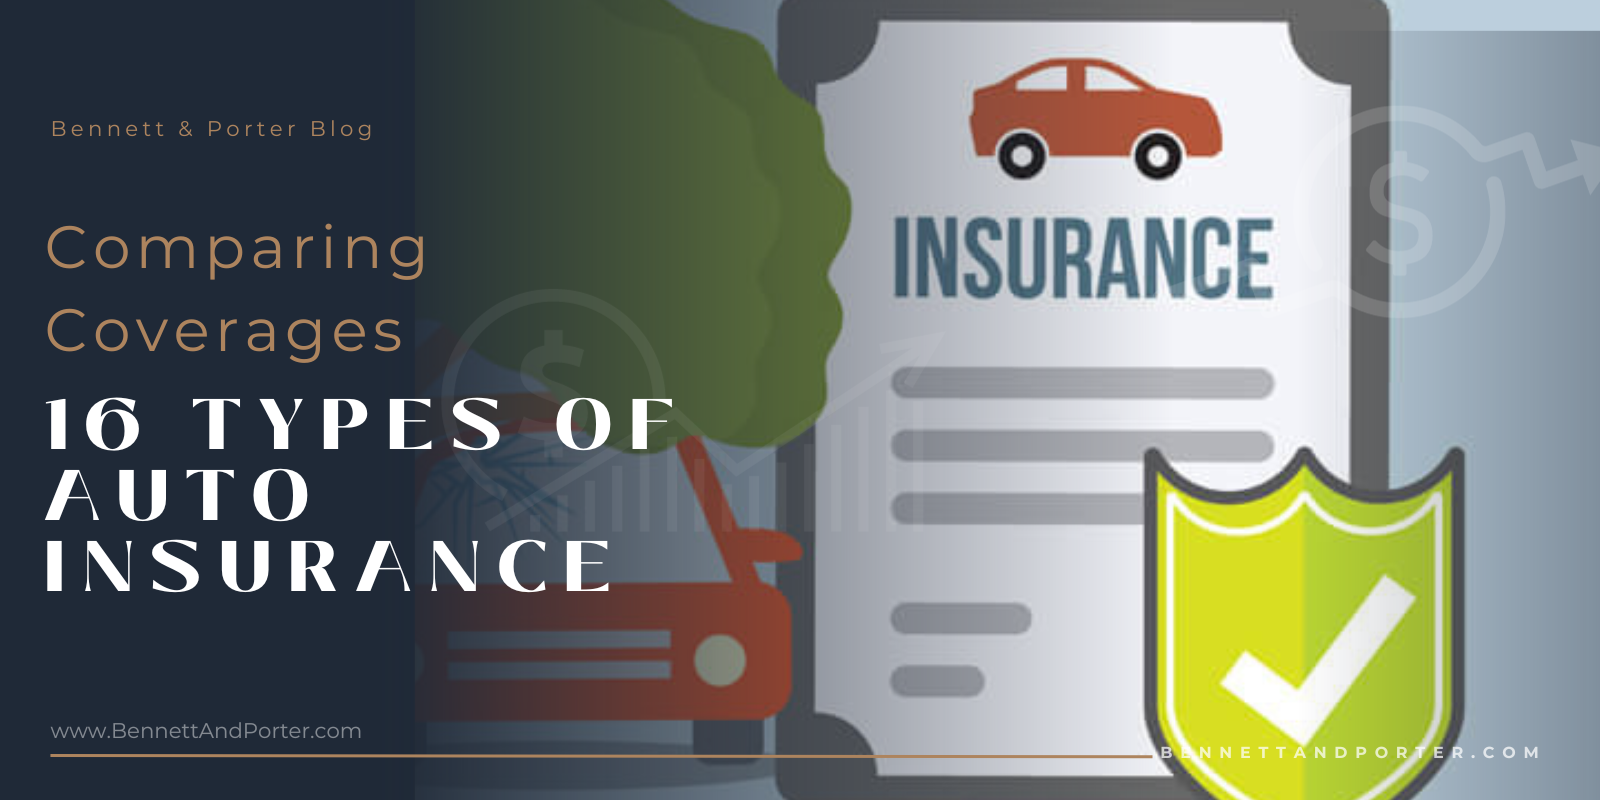 Types of Auto Insurance